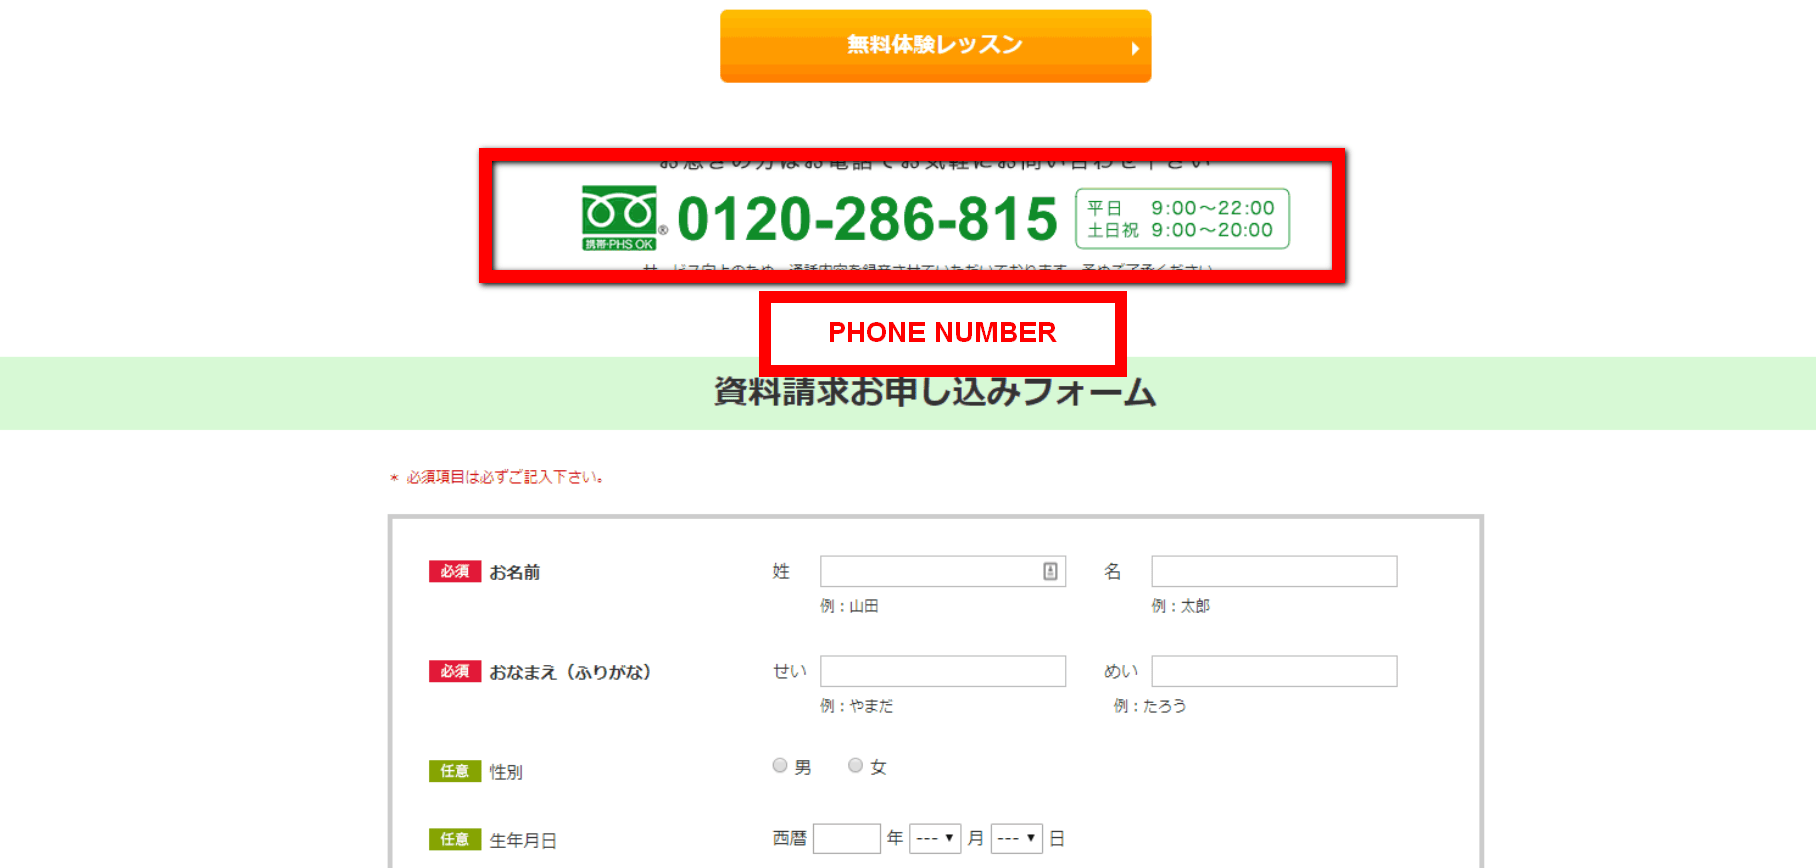 Gaba (language course) - Phone Number